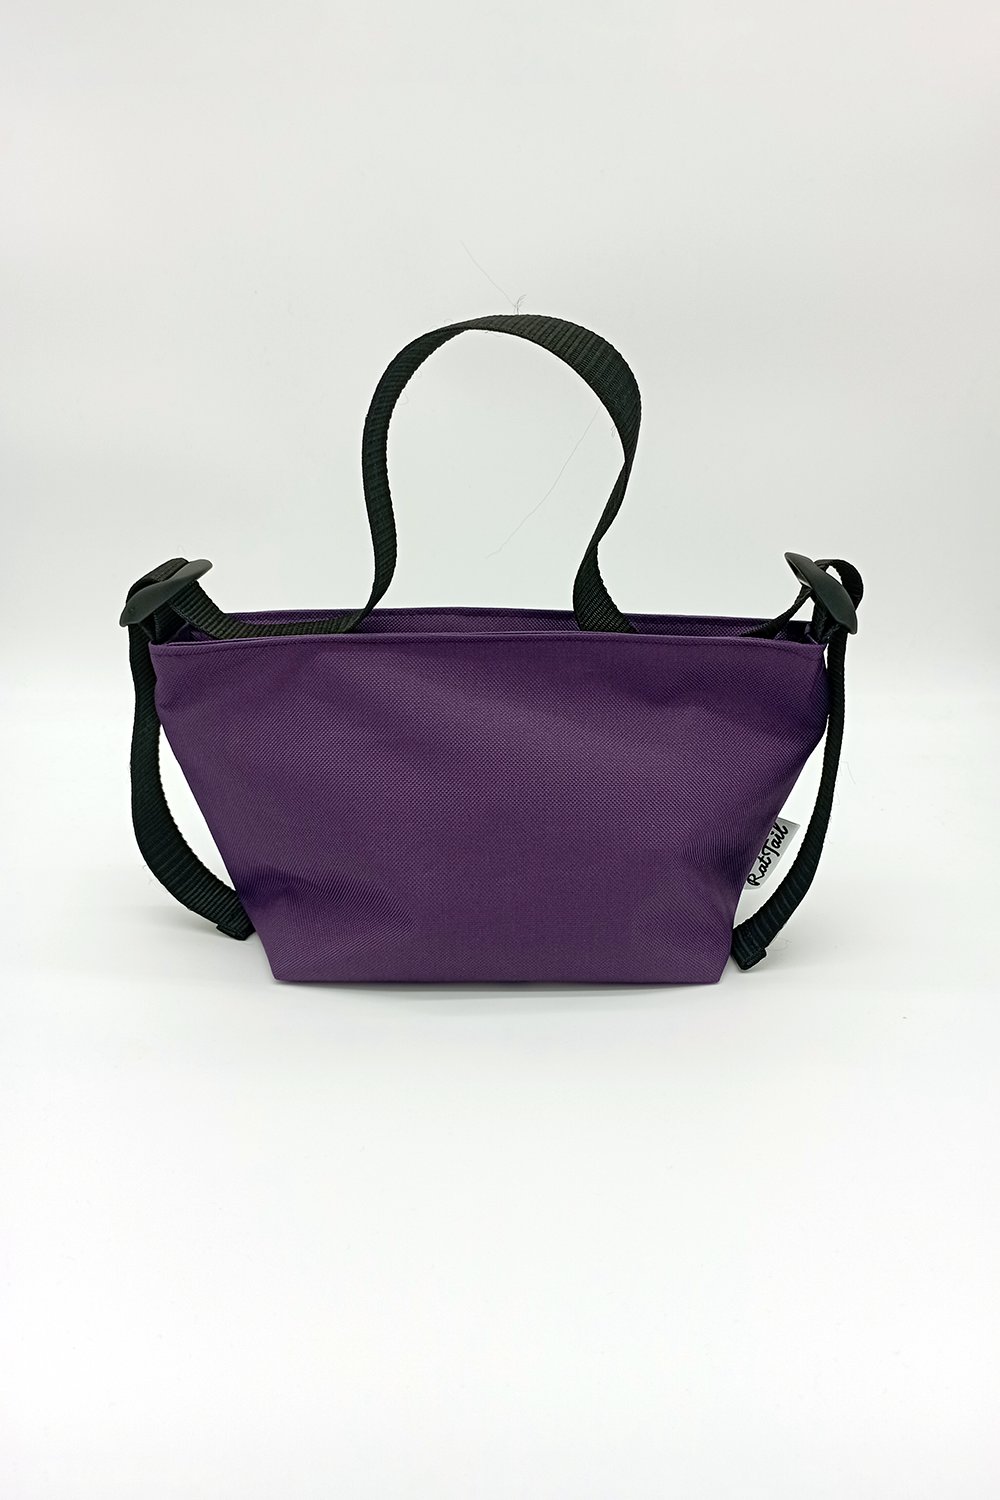 Image of CLOE - mini bag viola 